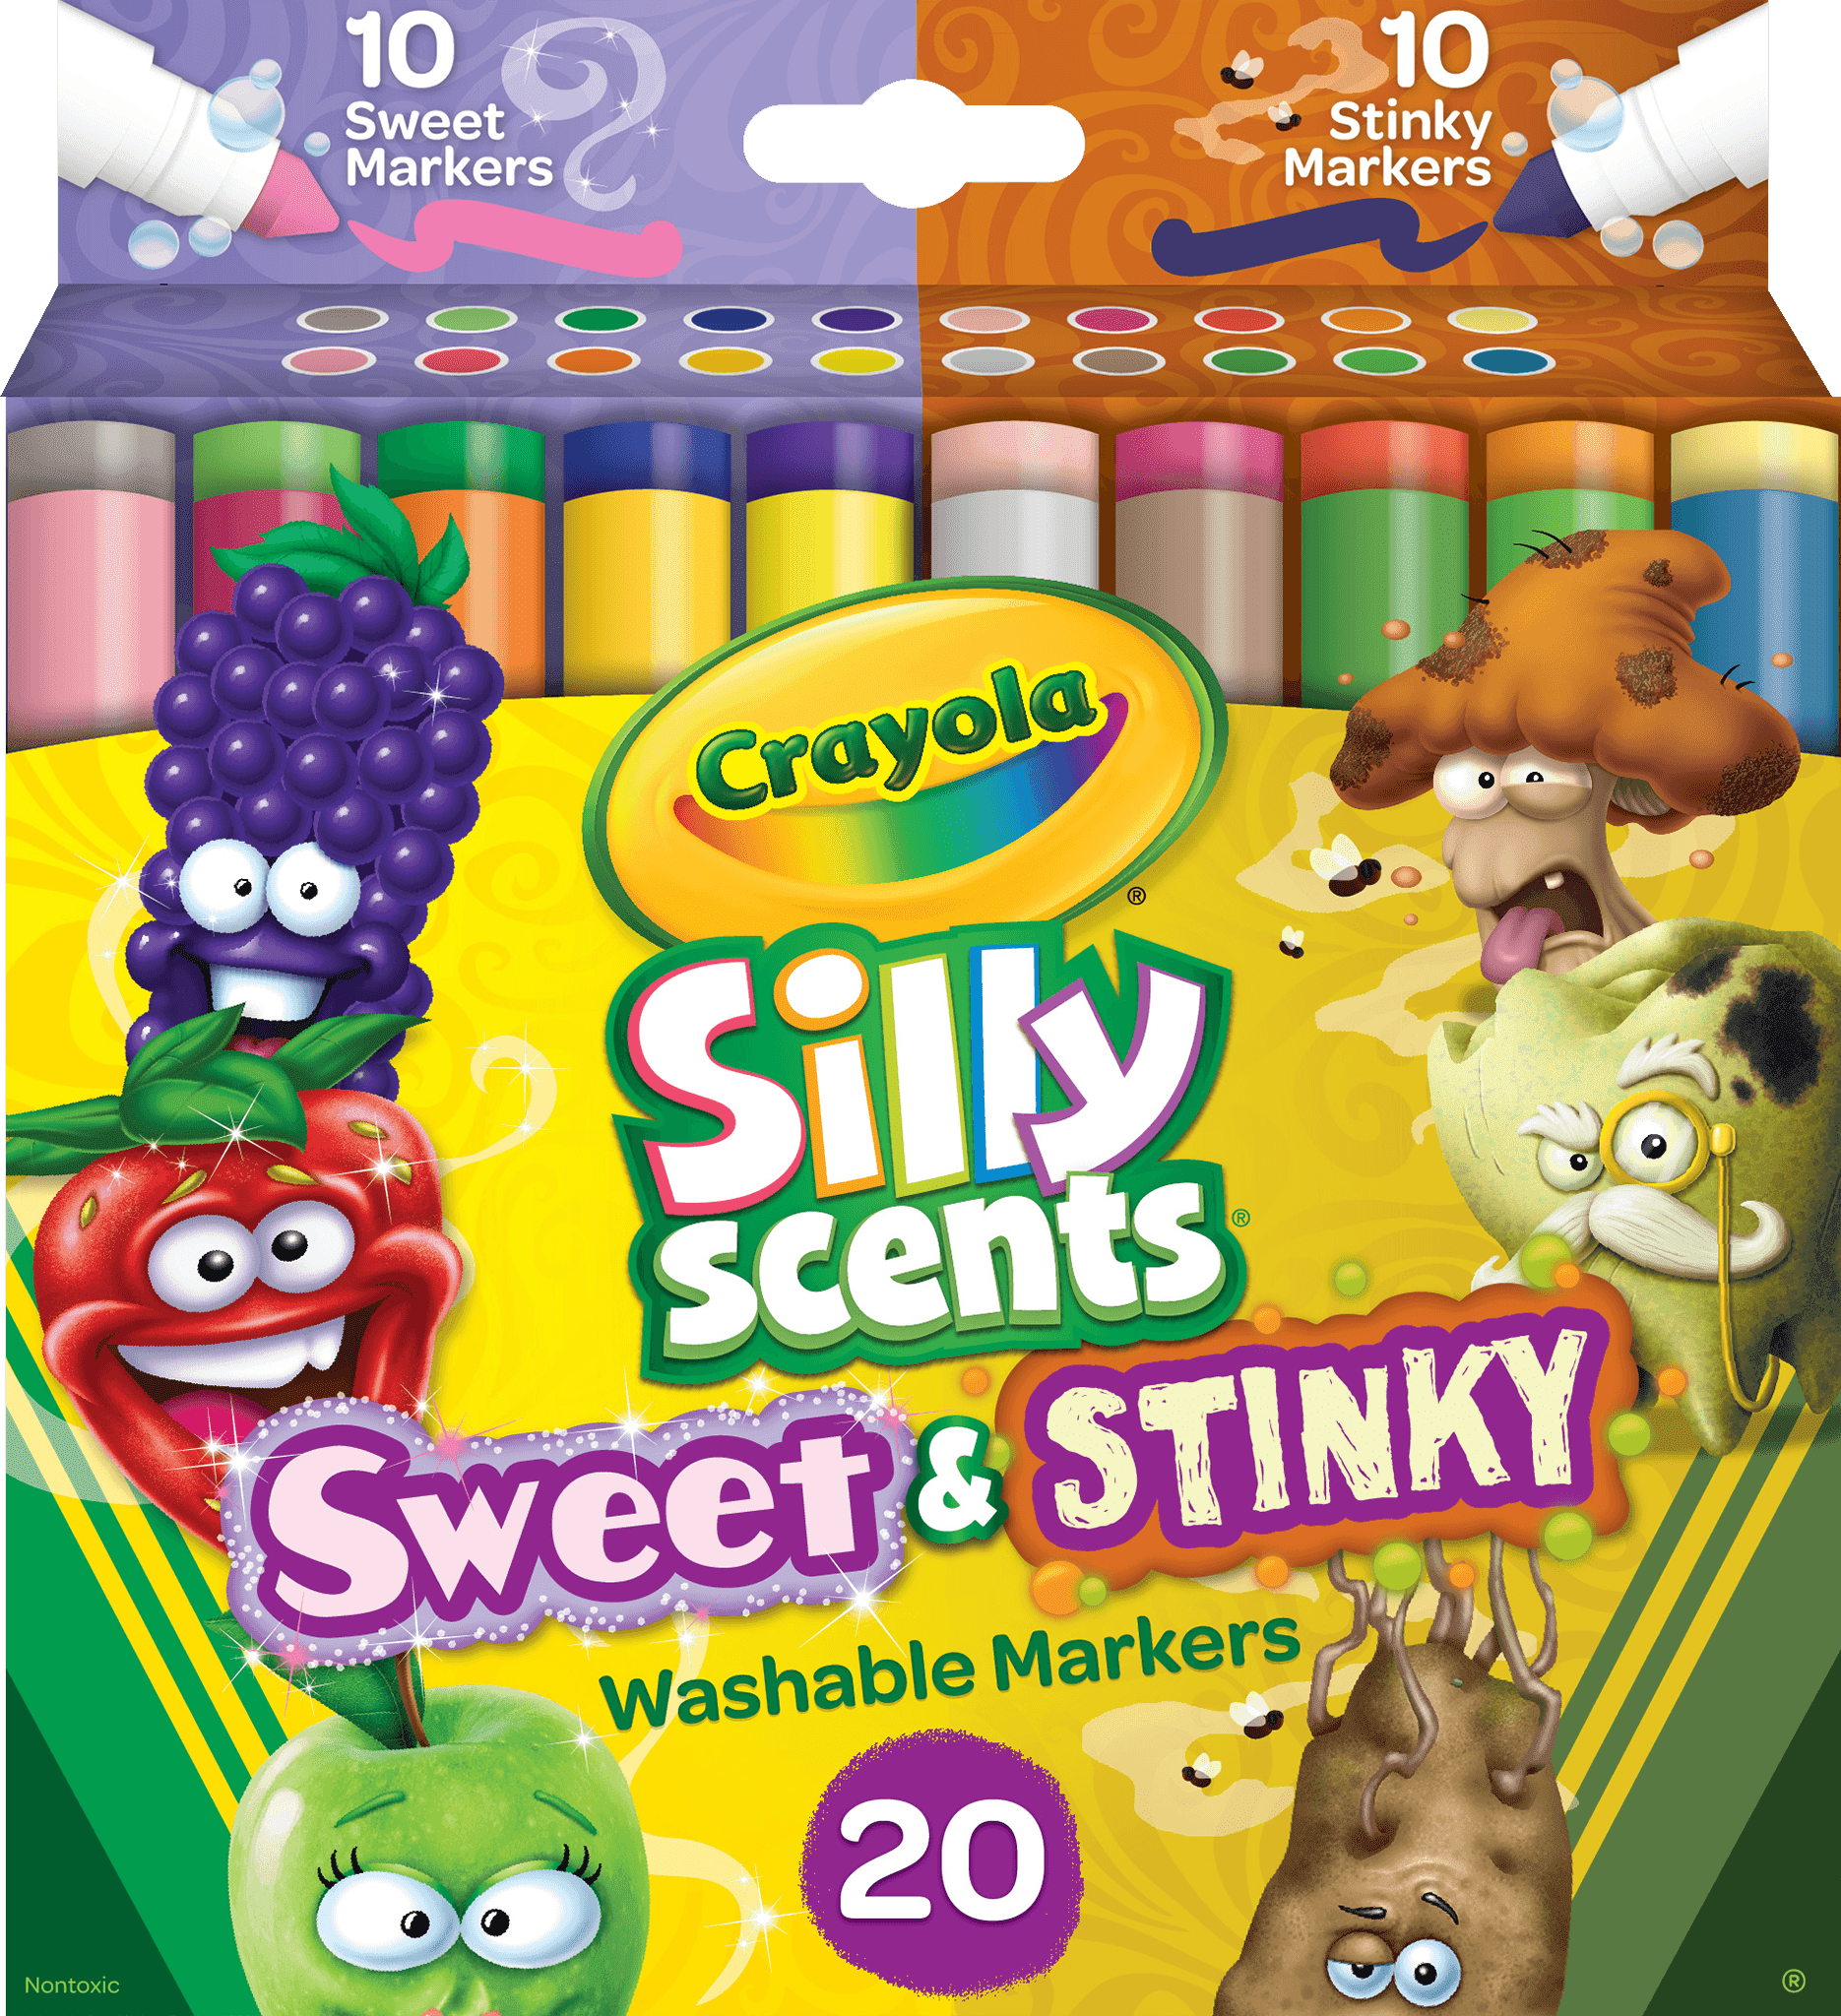 NEW Crayola Silly Scents Wacky Dough Making Kit